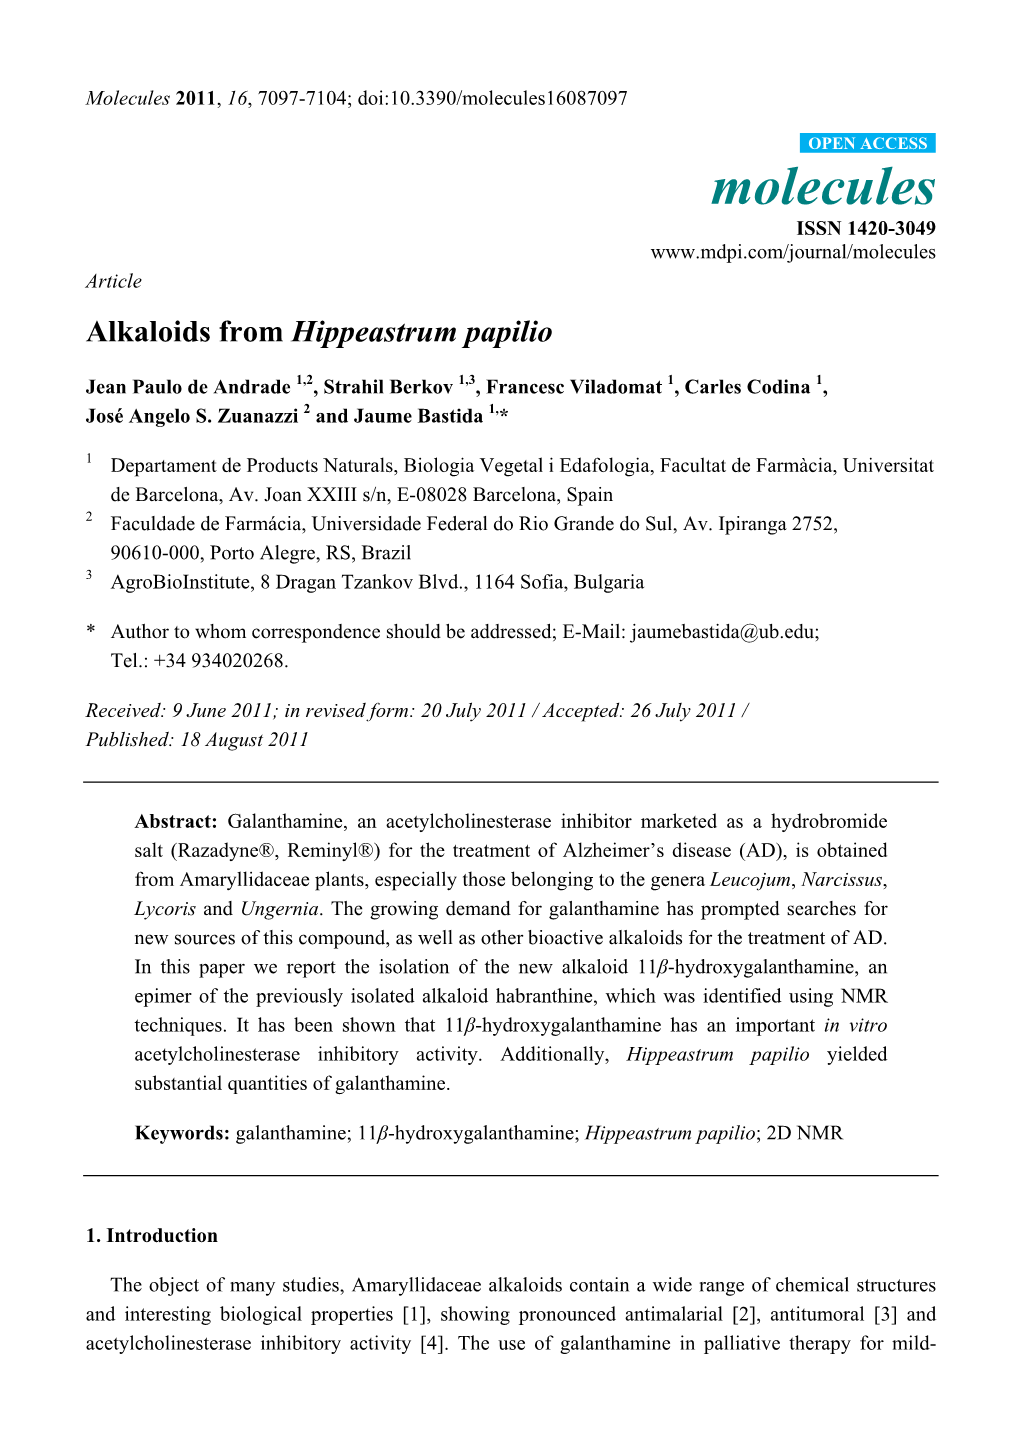 Alkaloids from Hippeastrum Papilio